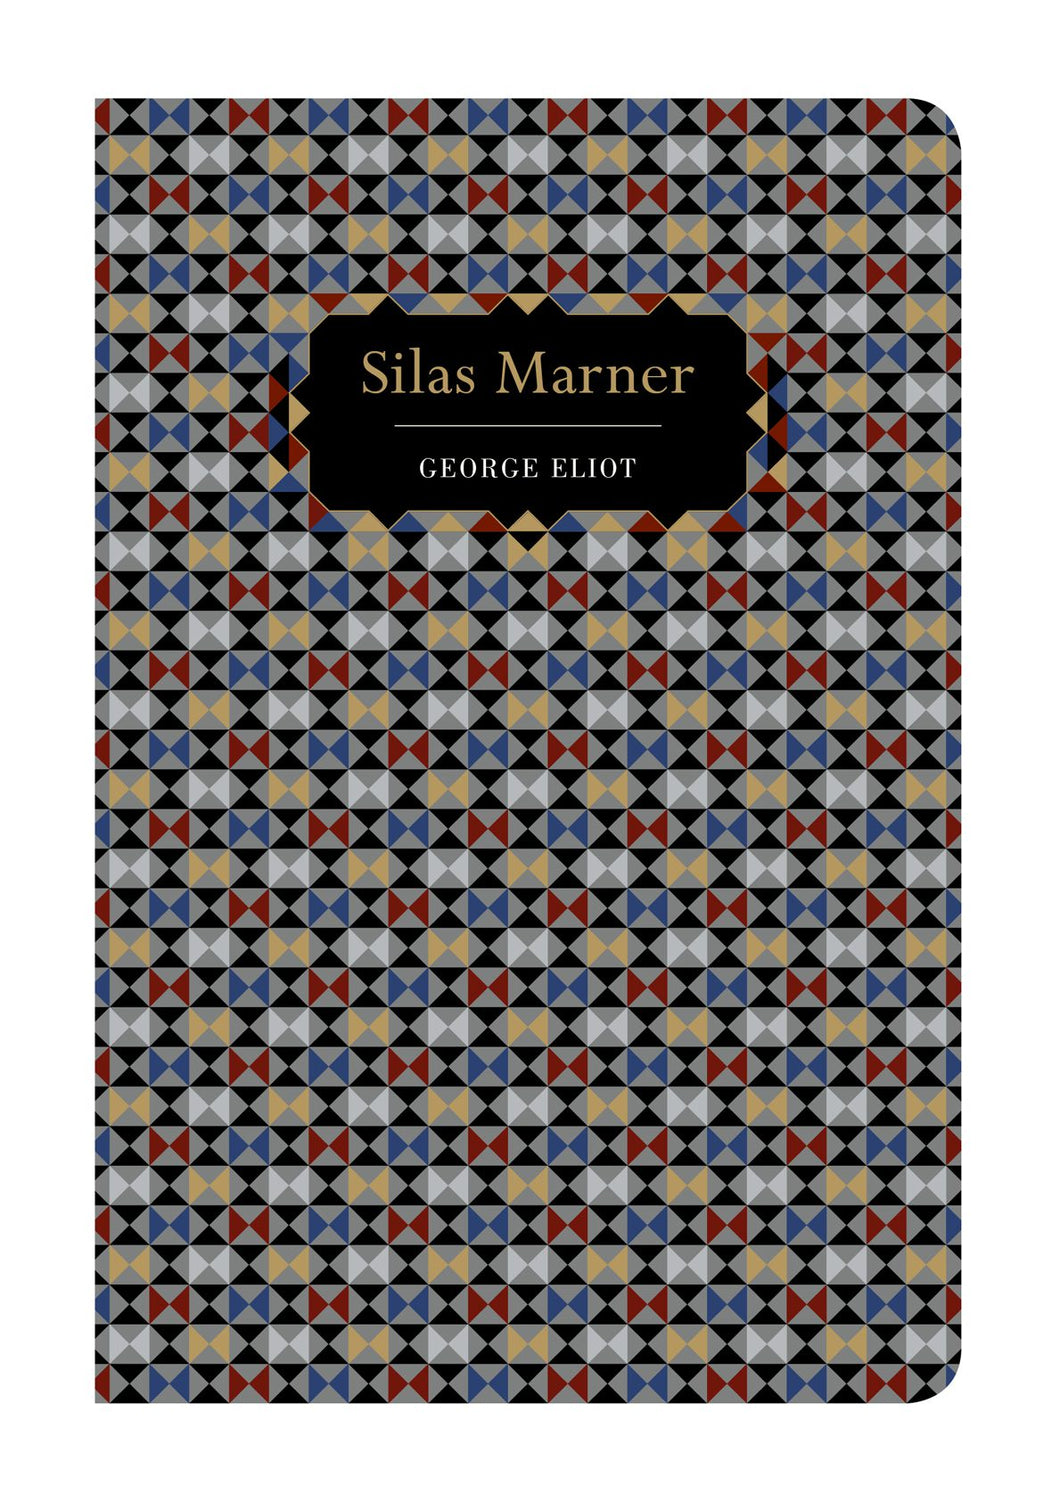 Silas Marner, George Eliot (Chiltern Classics)